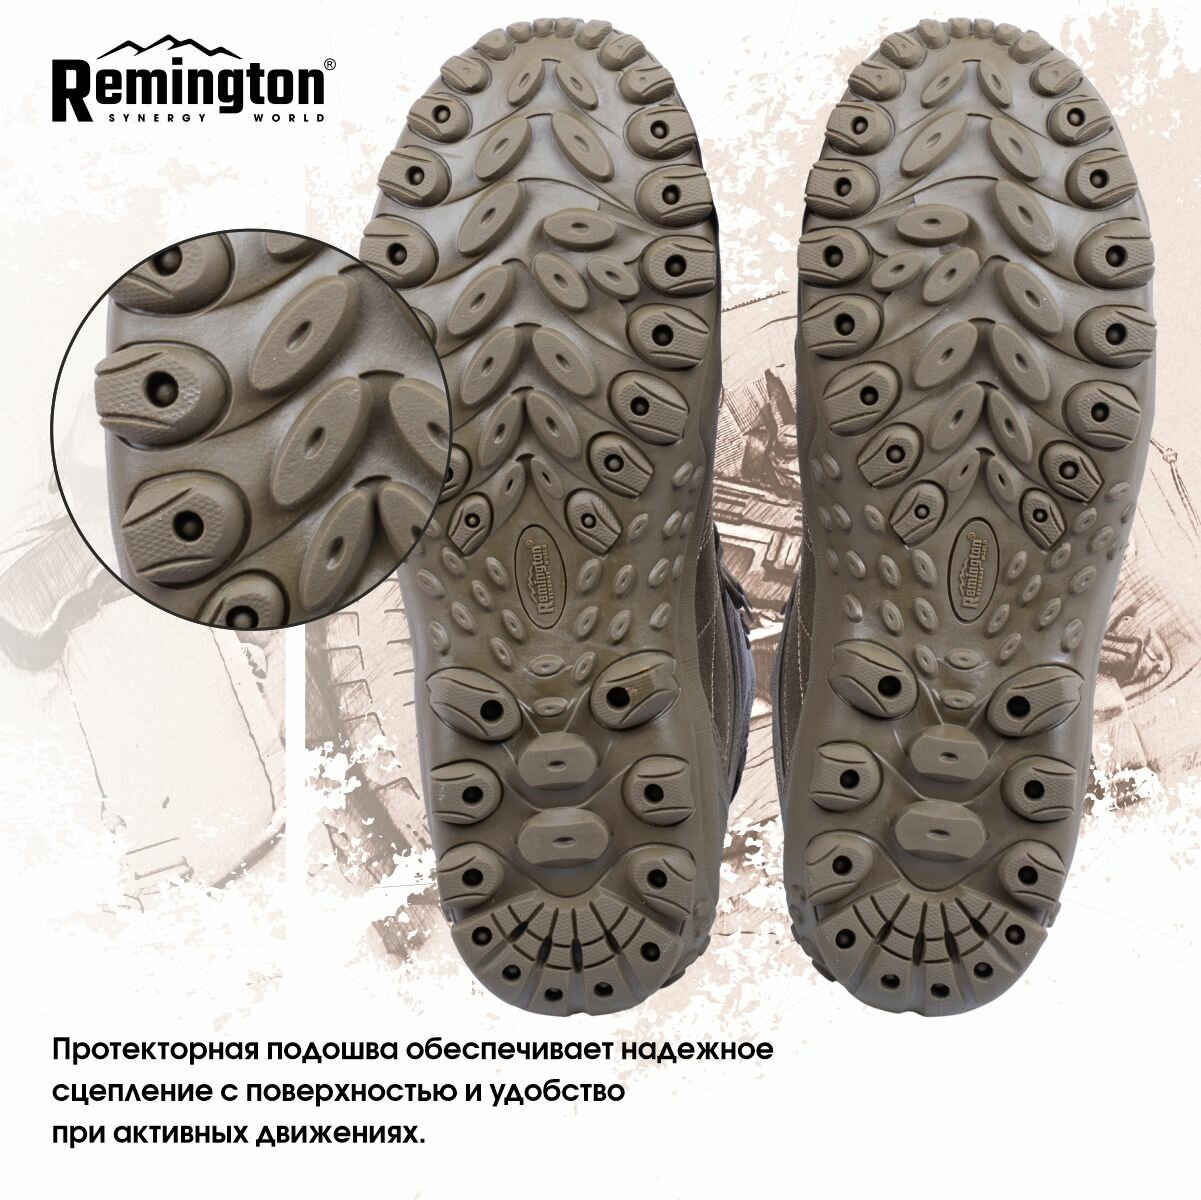 Ботинки Remington Boots VITAL EX2 Tactical Green 200 Grams Thinsulate р. 44 RB4439-306